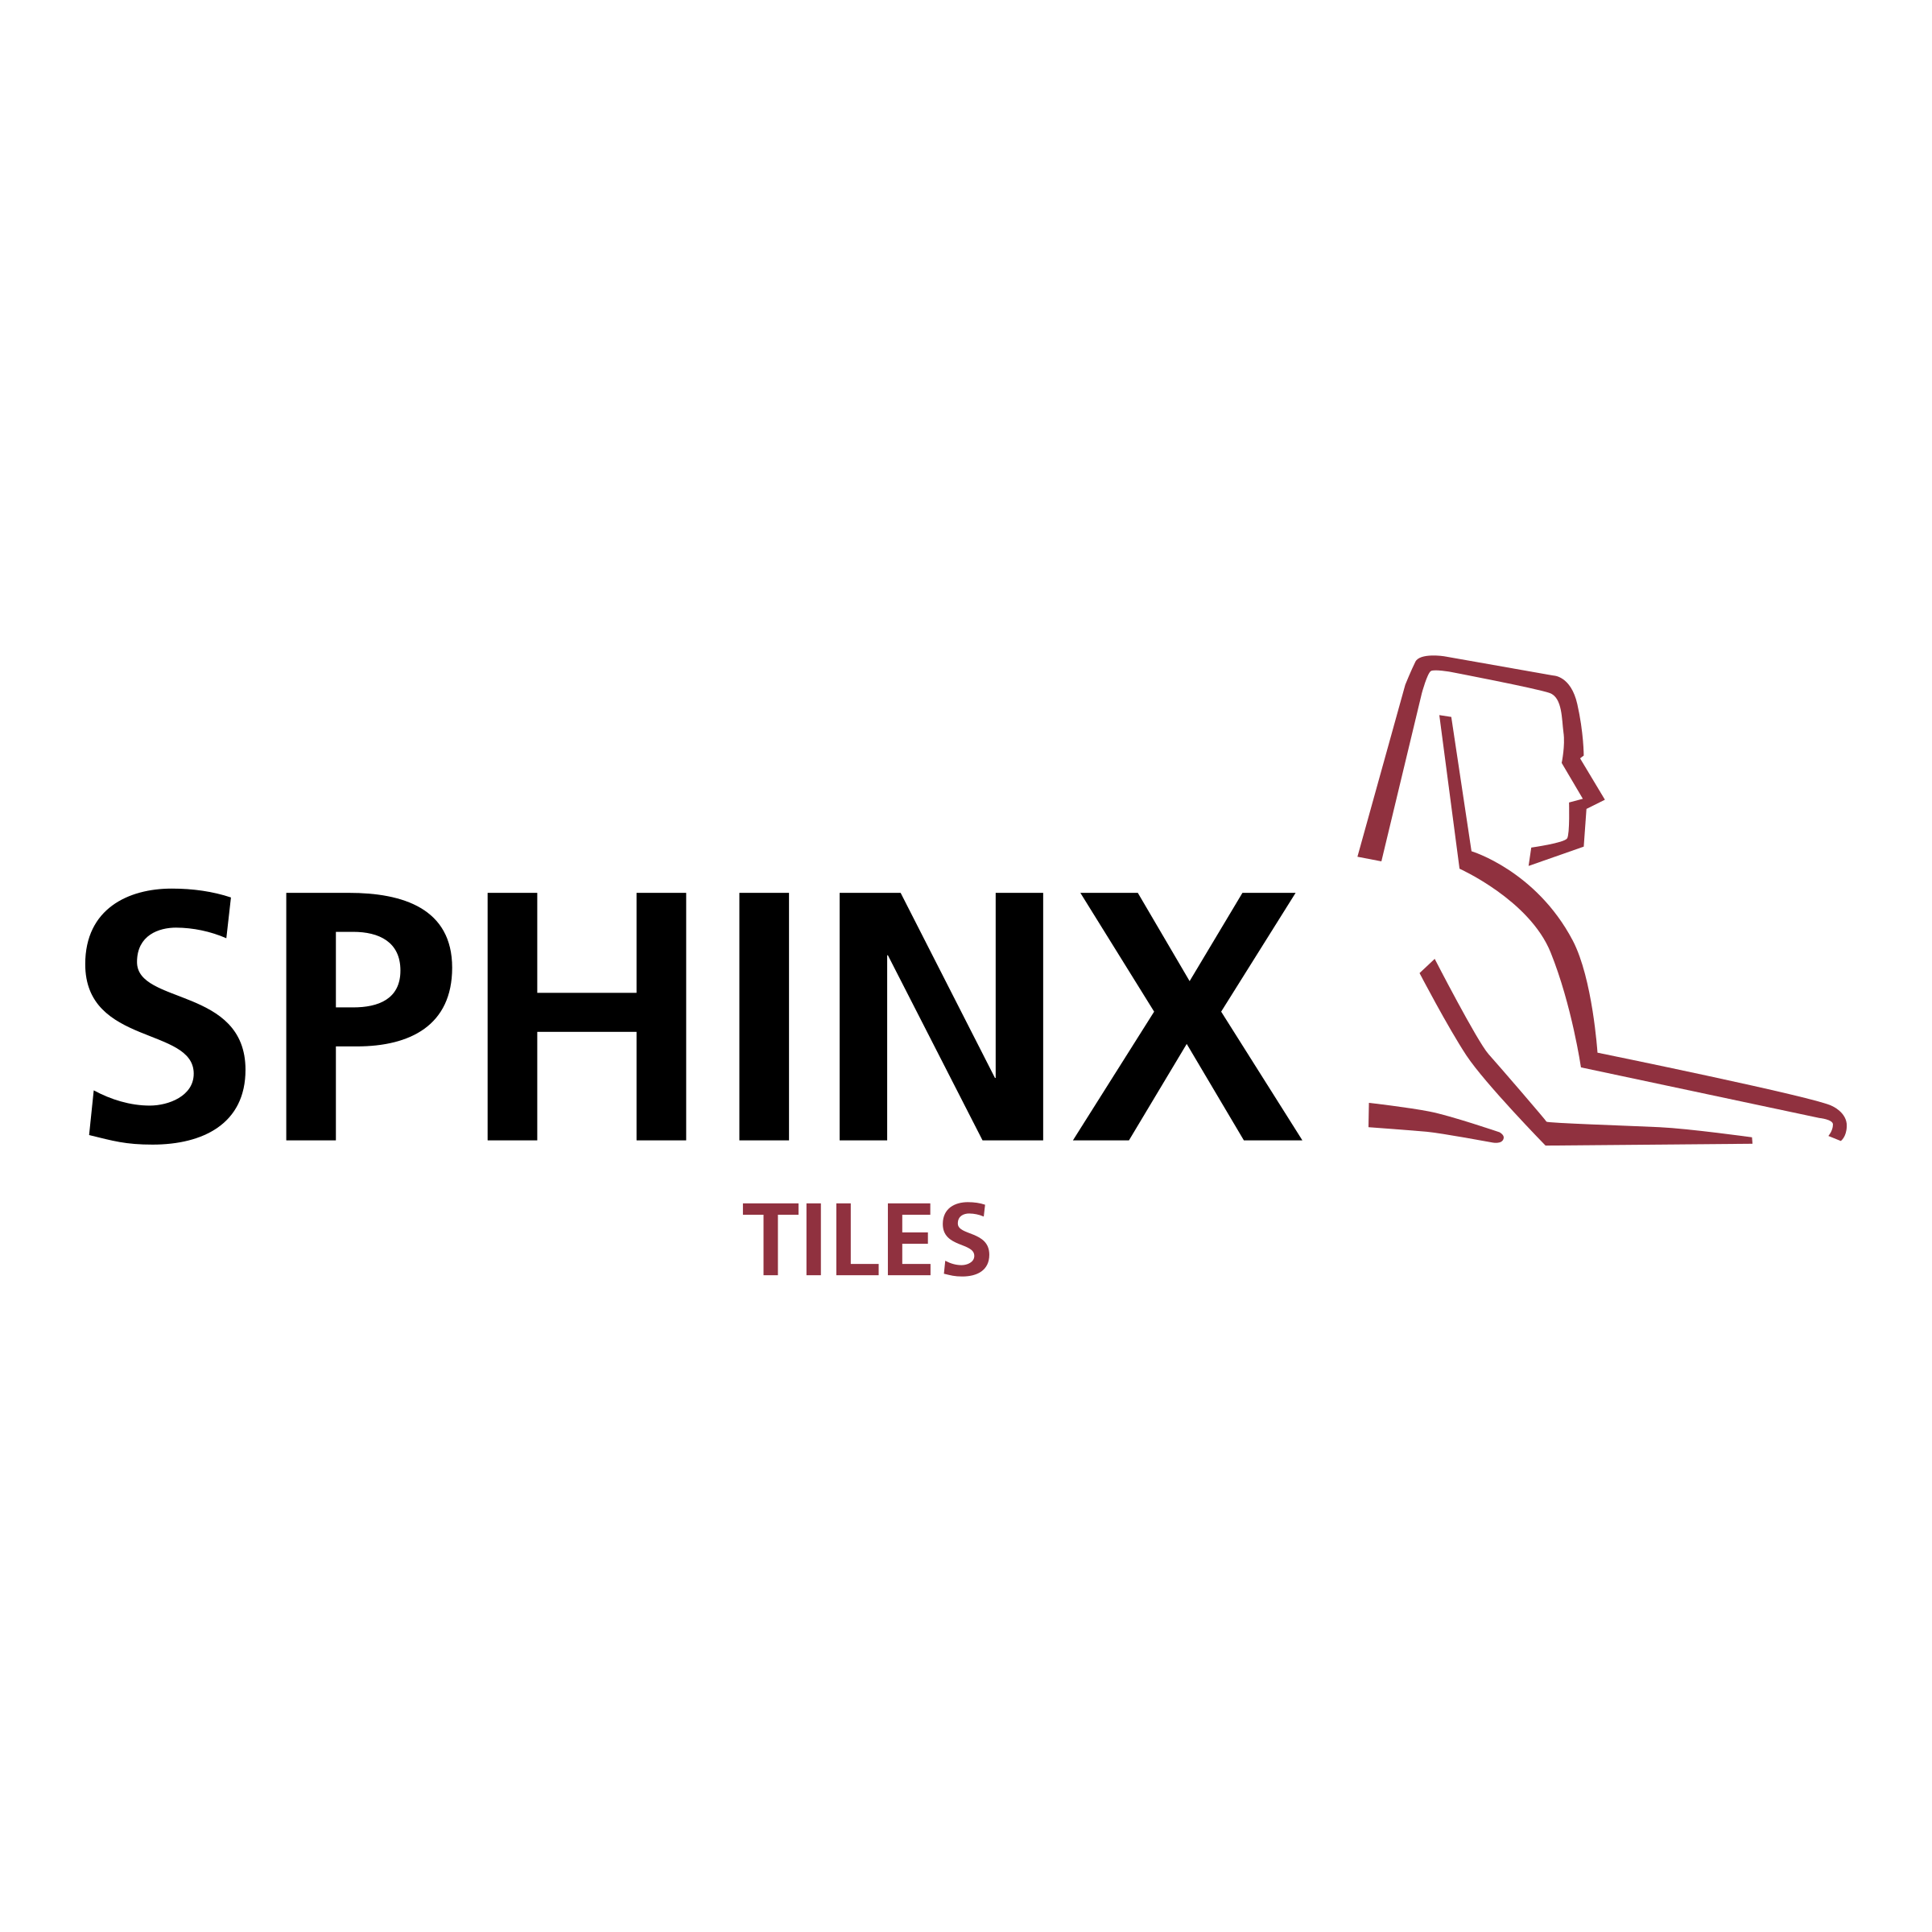 Sphinx Logo - Sphinx Tiles Logo PNG Transparent & SVG Vector - Freebie Supply